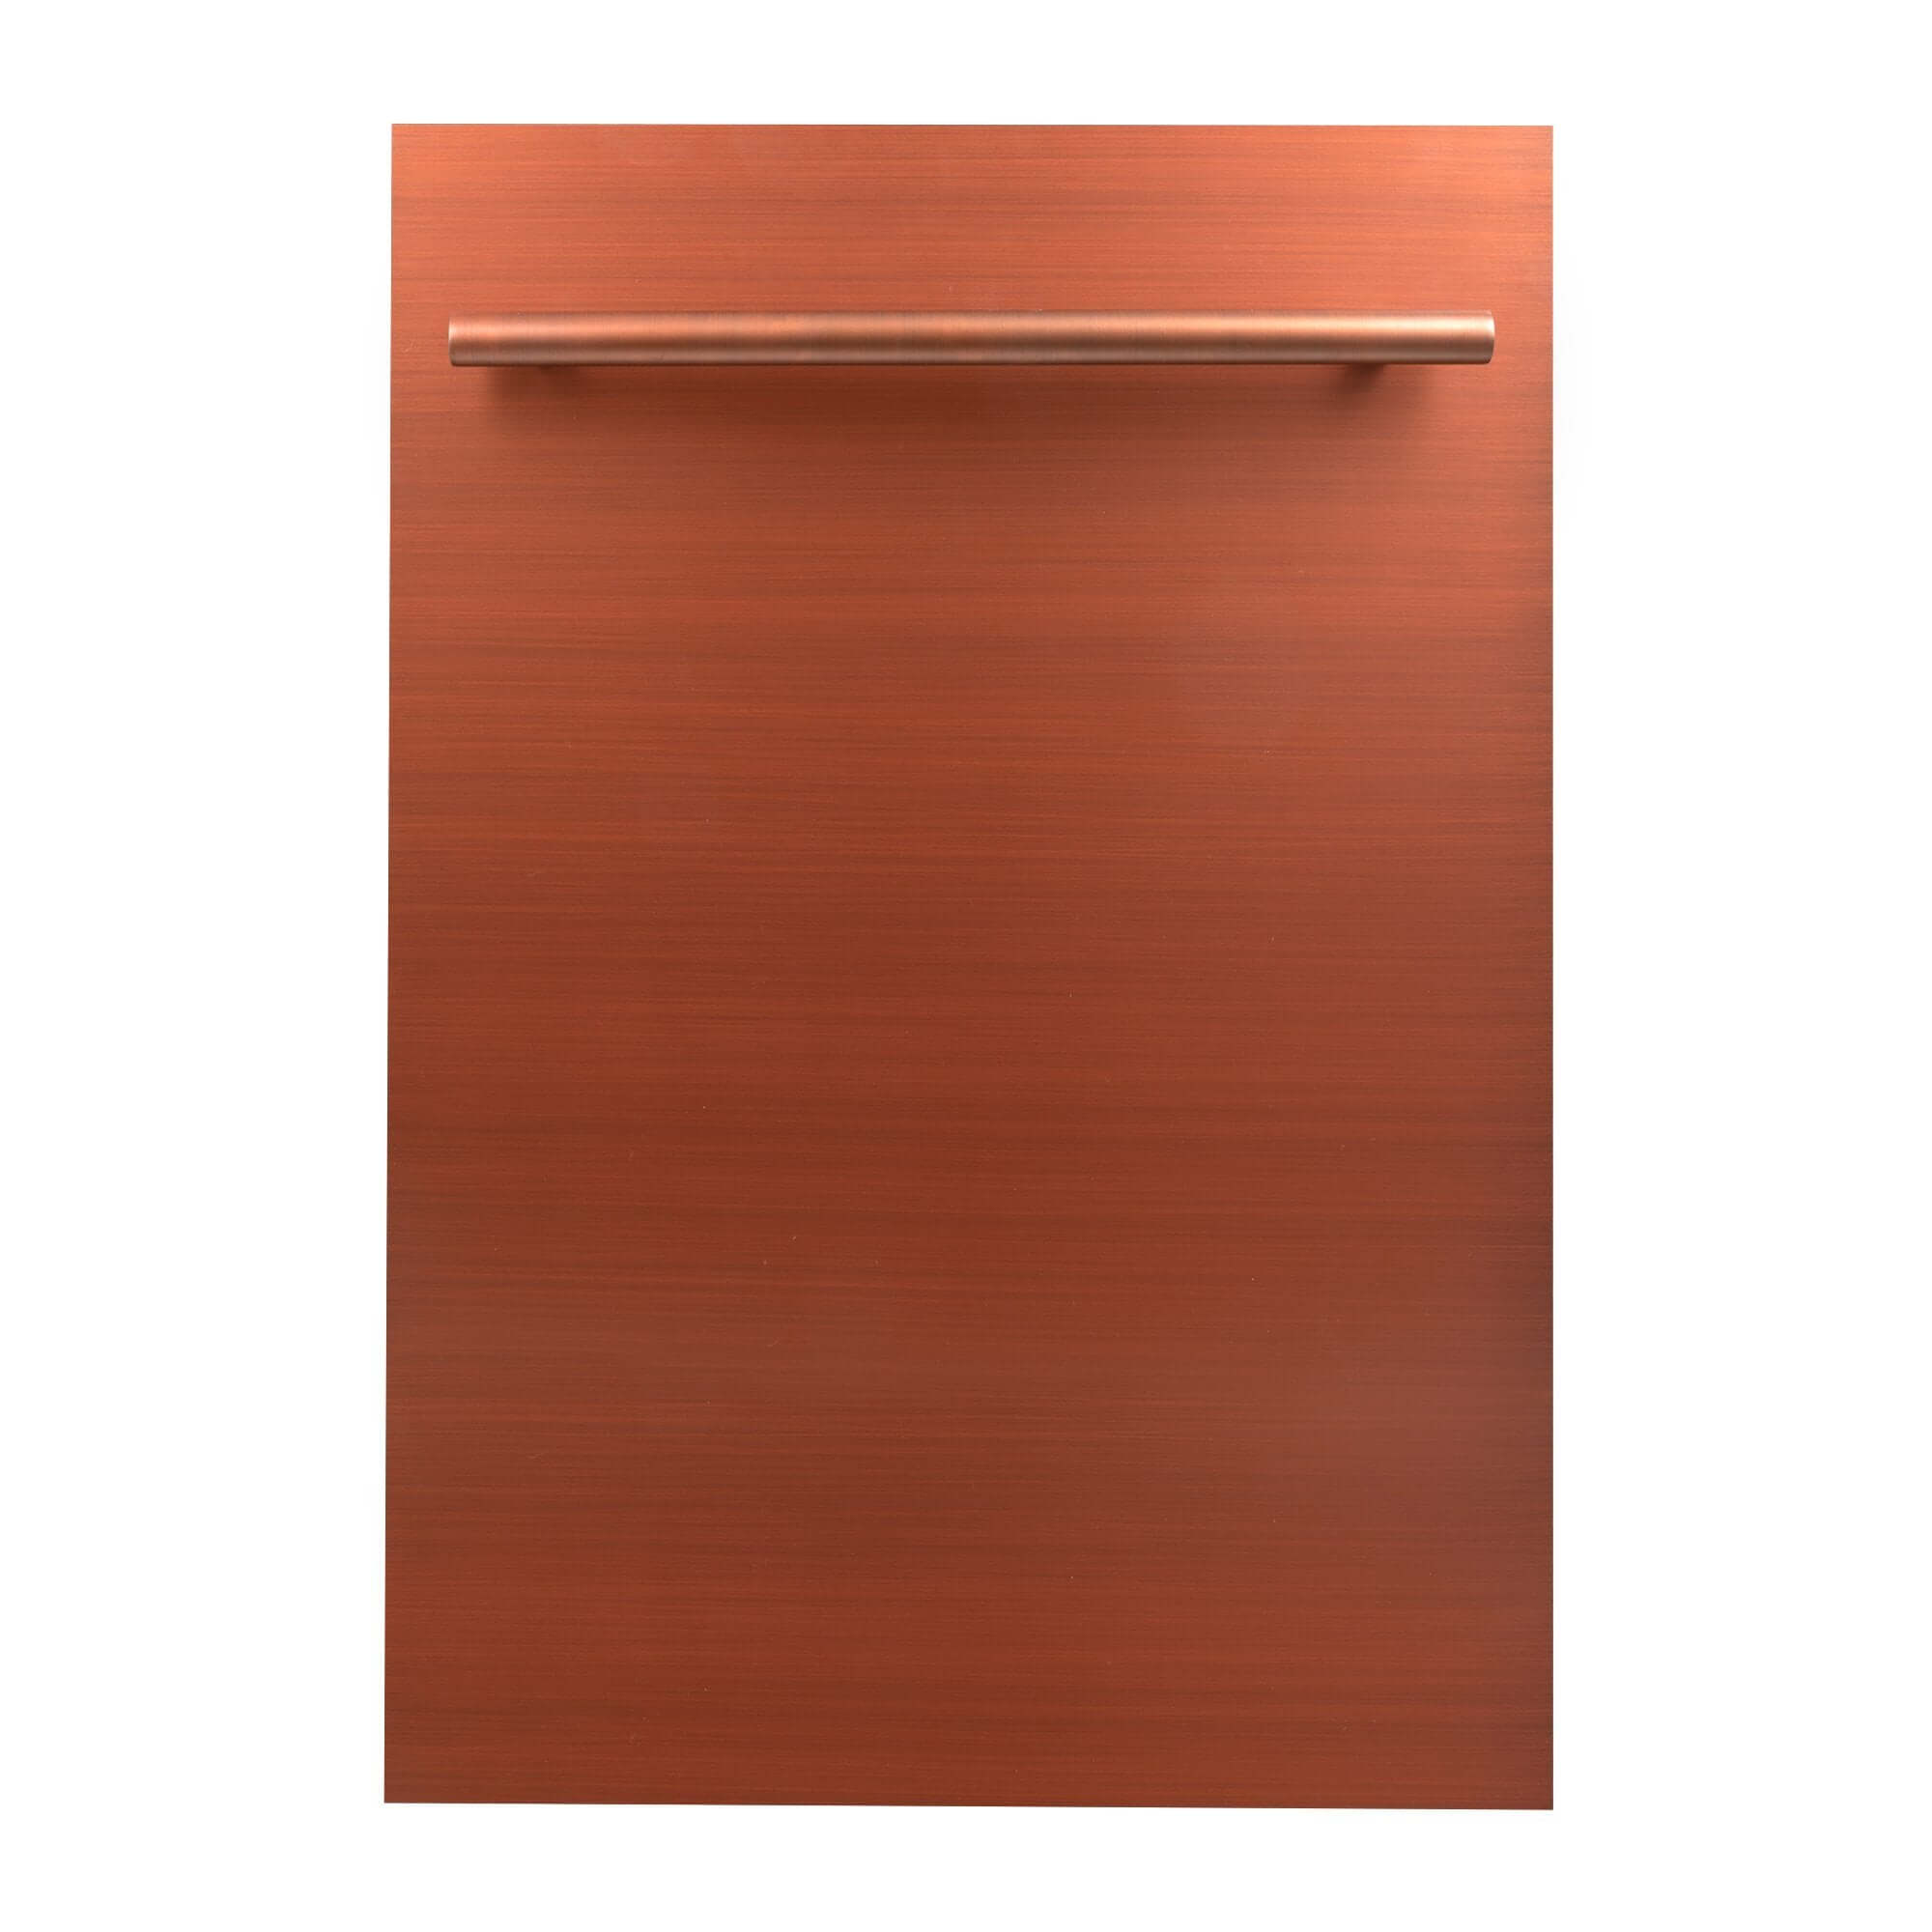 ZLINE 18 in. Dishwasher Panel with Modern Handle (DP-18) Copper